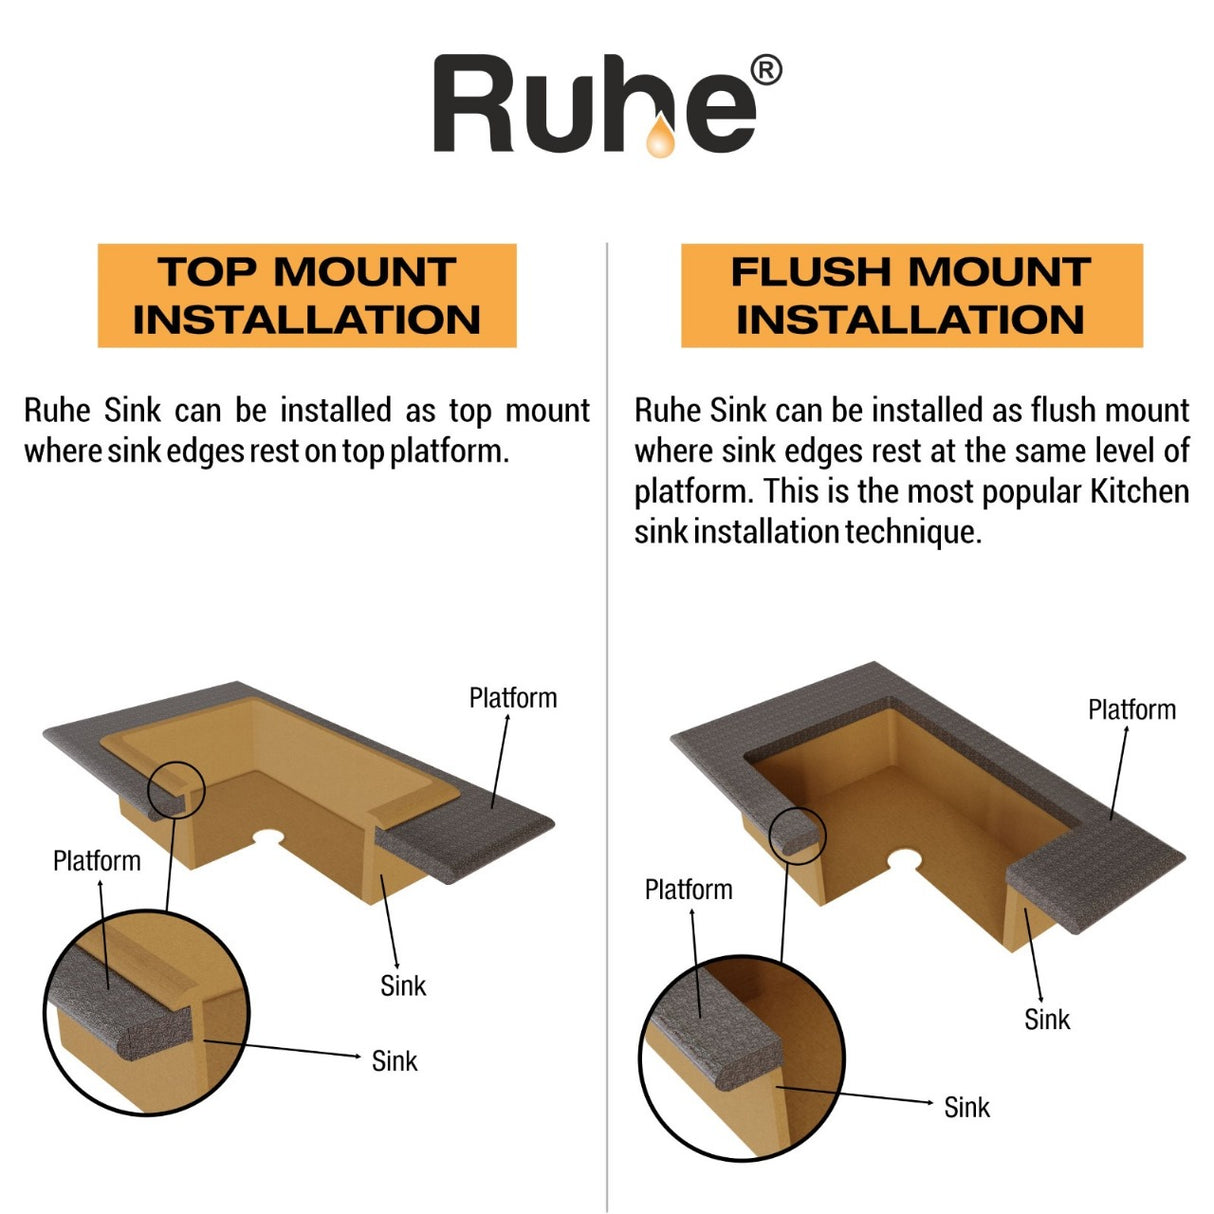 Quartz Single Bowl with Drainboard Kitchen Sink - Sand Choco (36 x 18 x 9 inches) - by Ruhe®